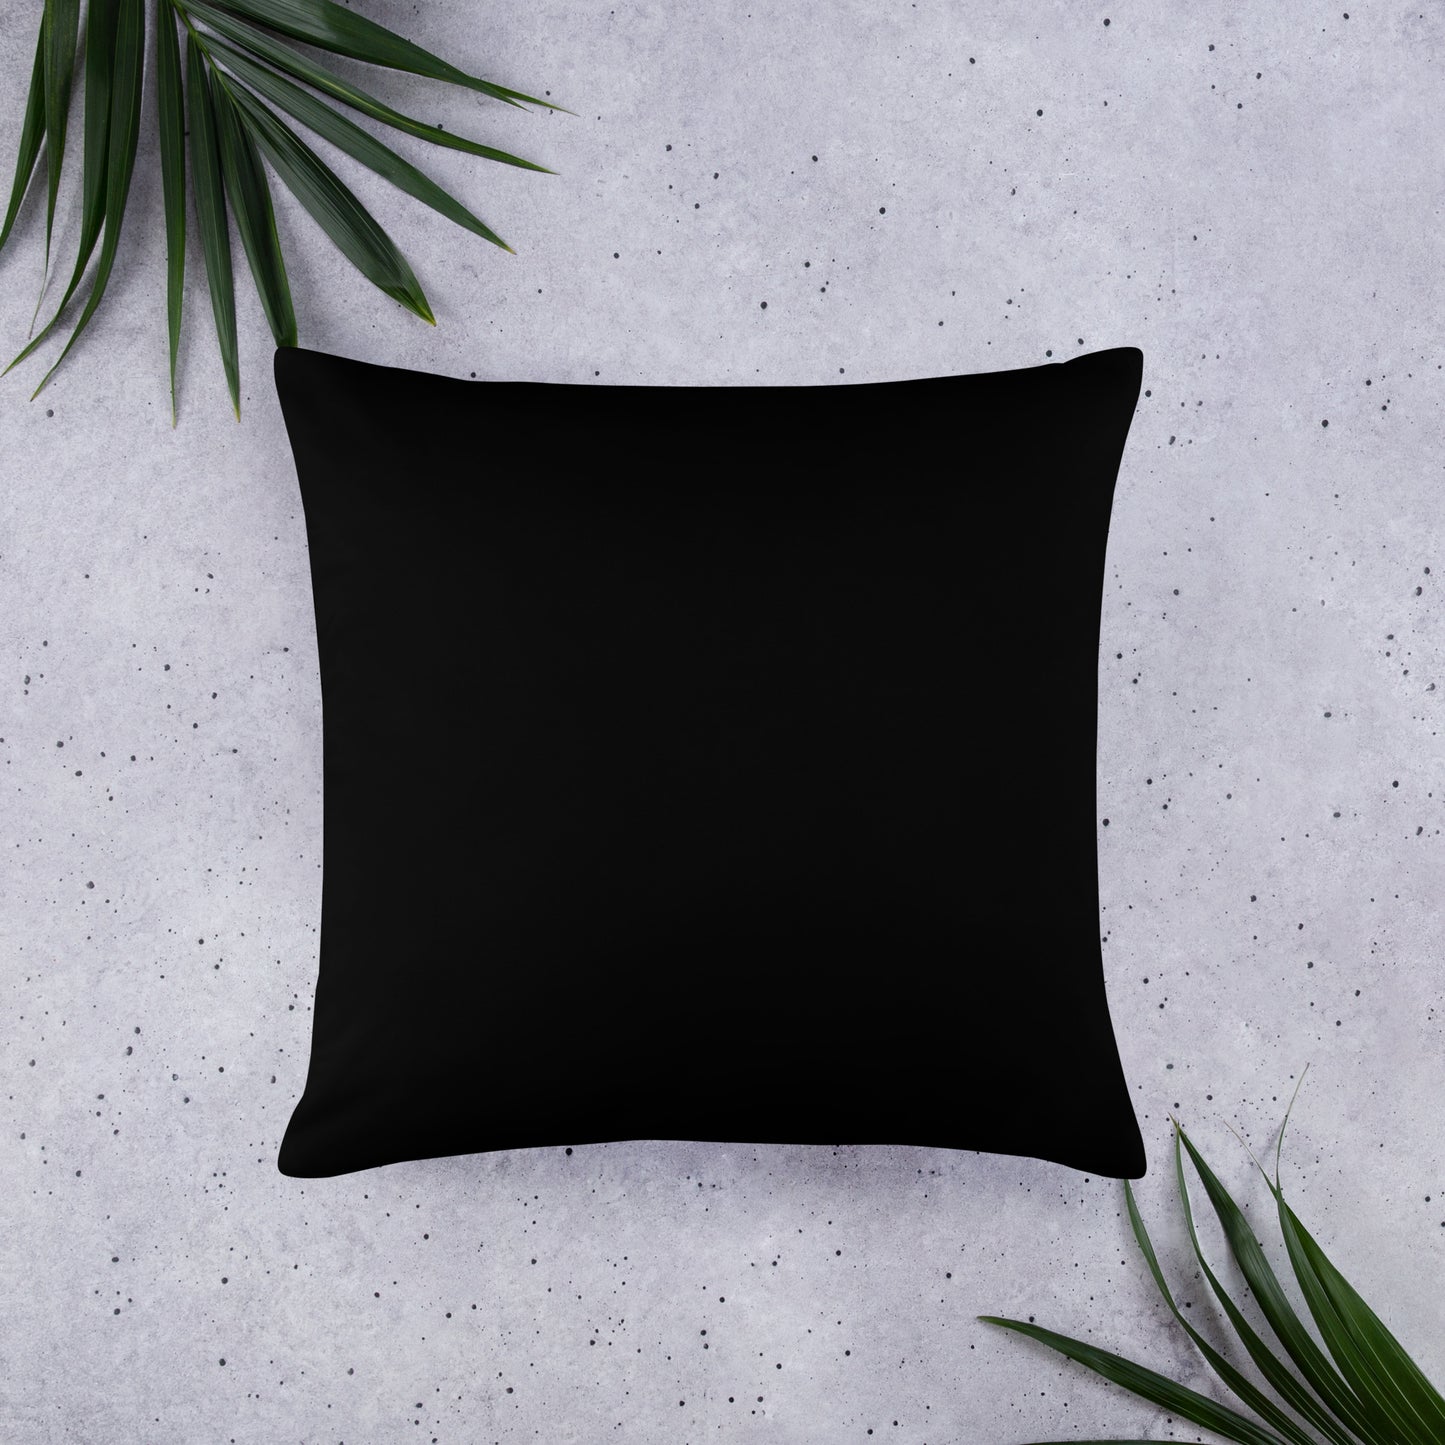 Scorpio Basic Pillow